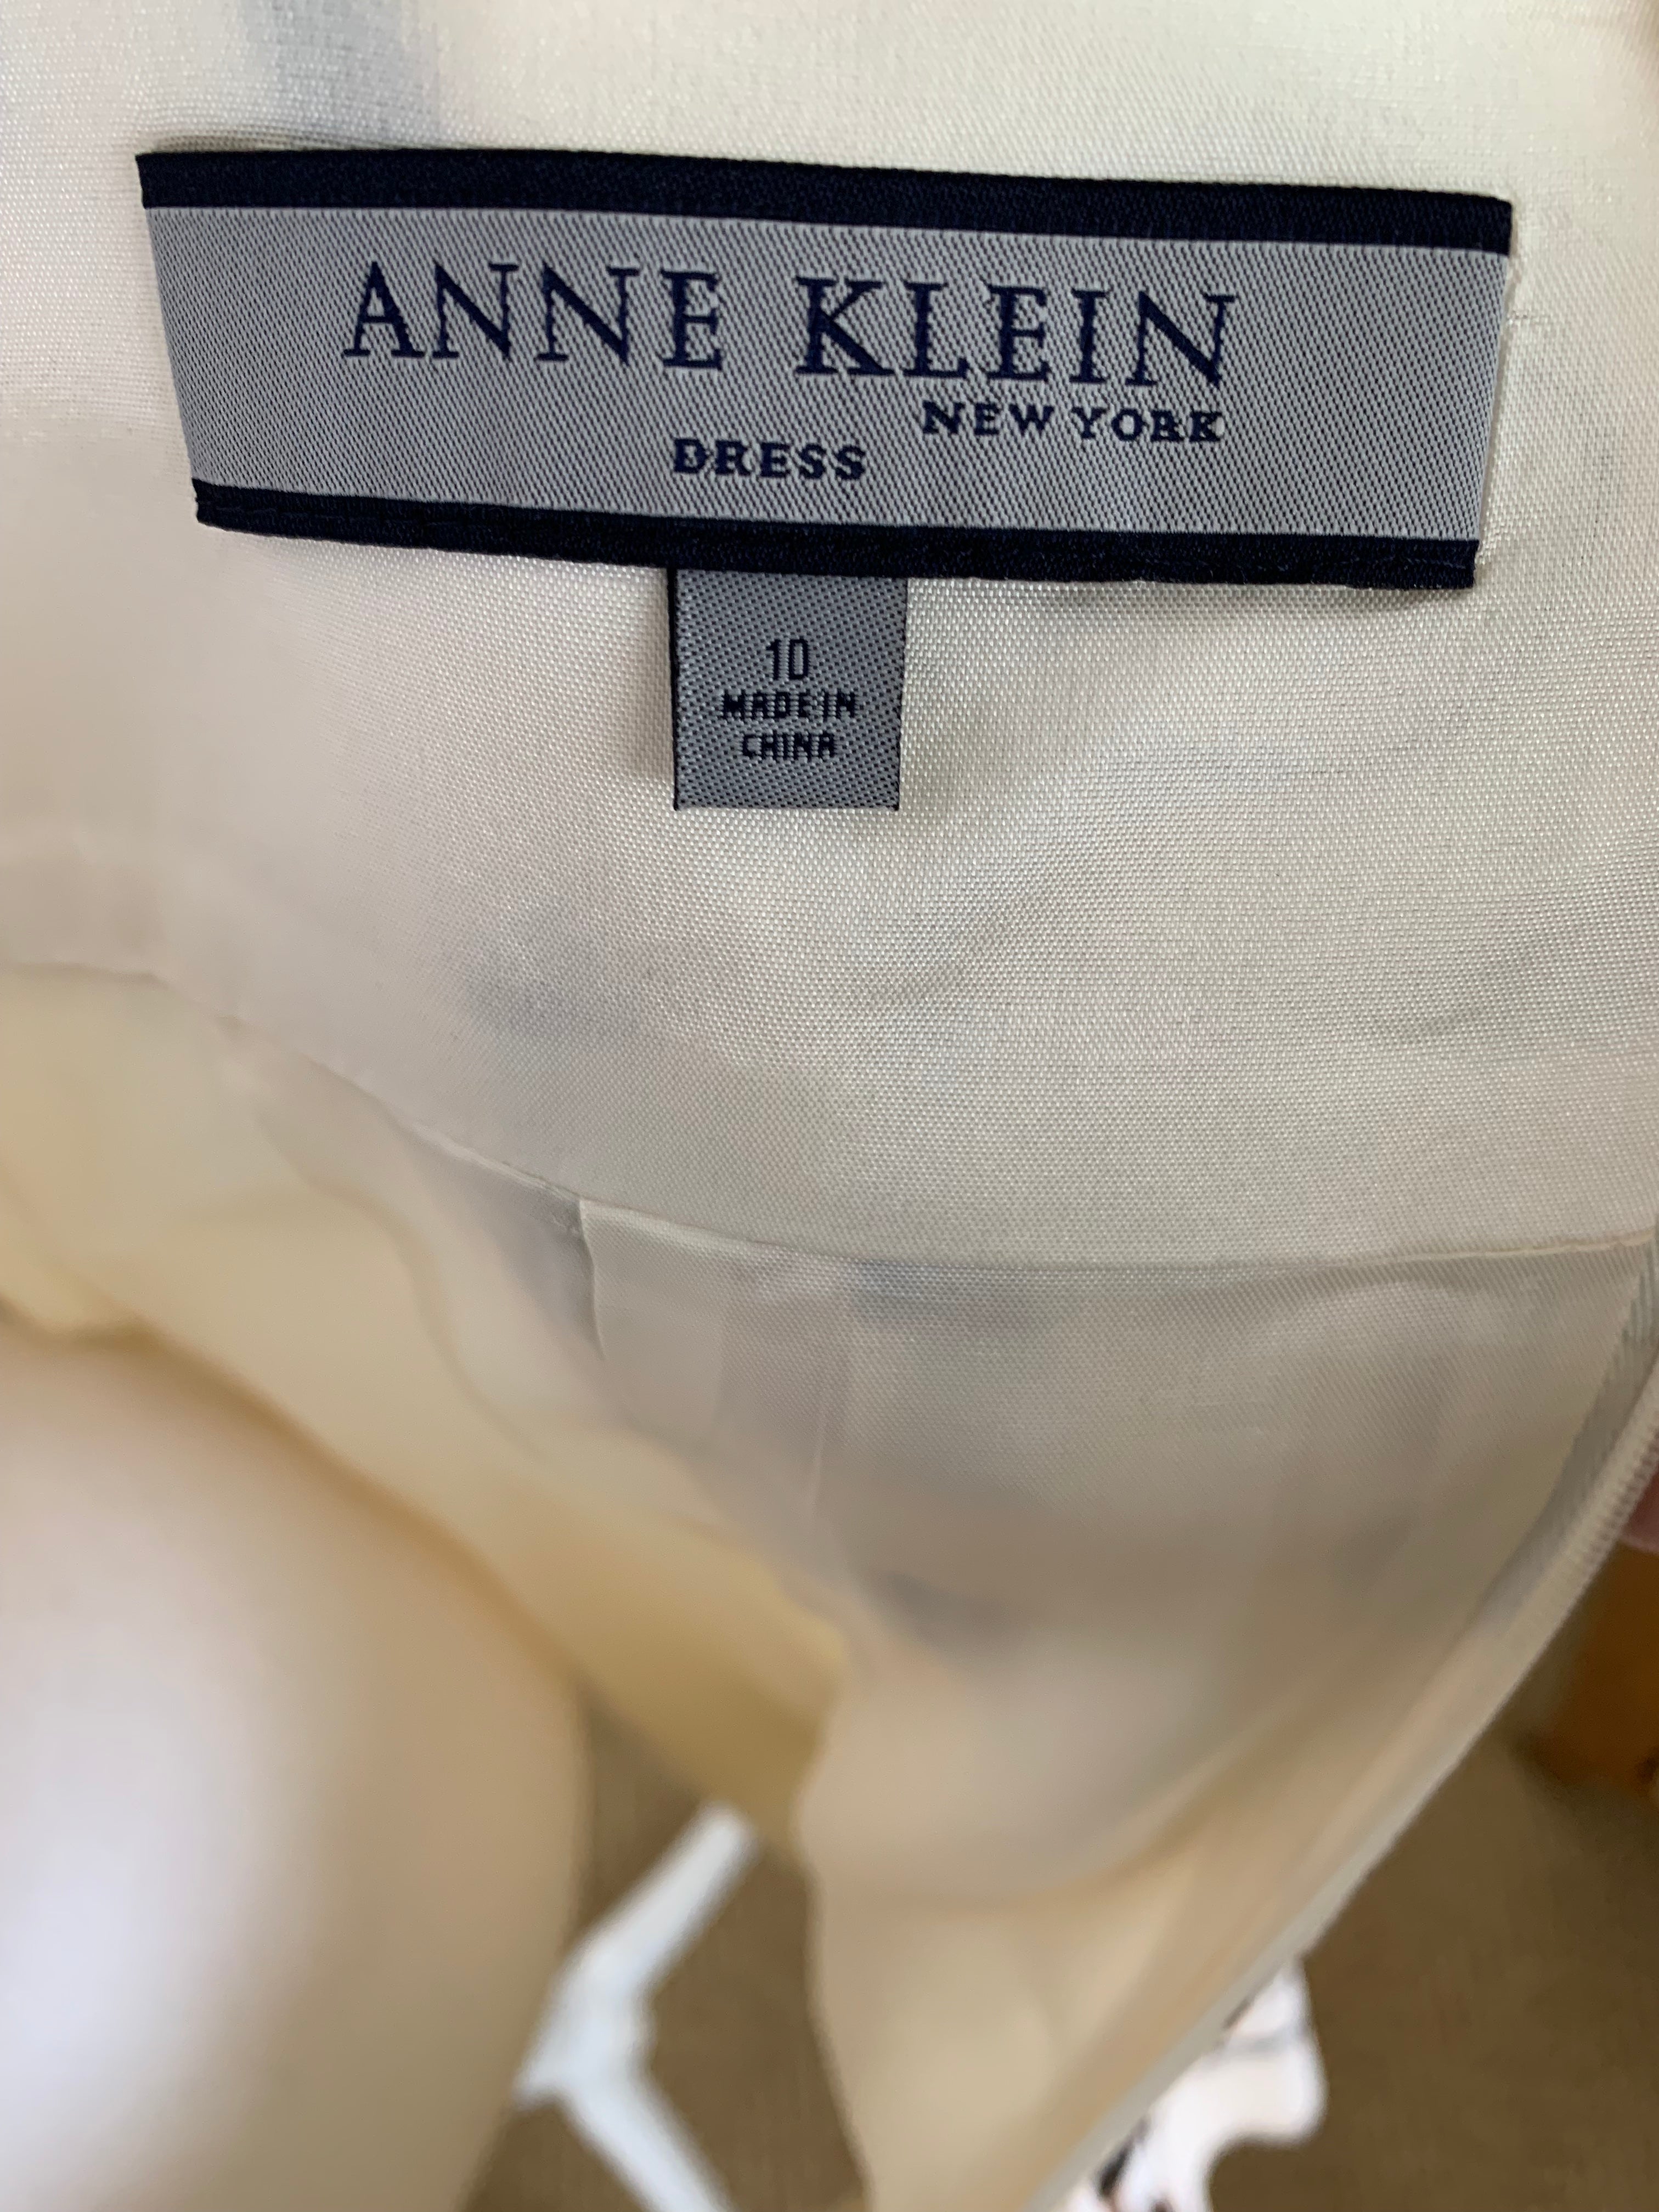 Anne Klein Sleeveless Bow Dress, 10